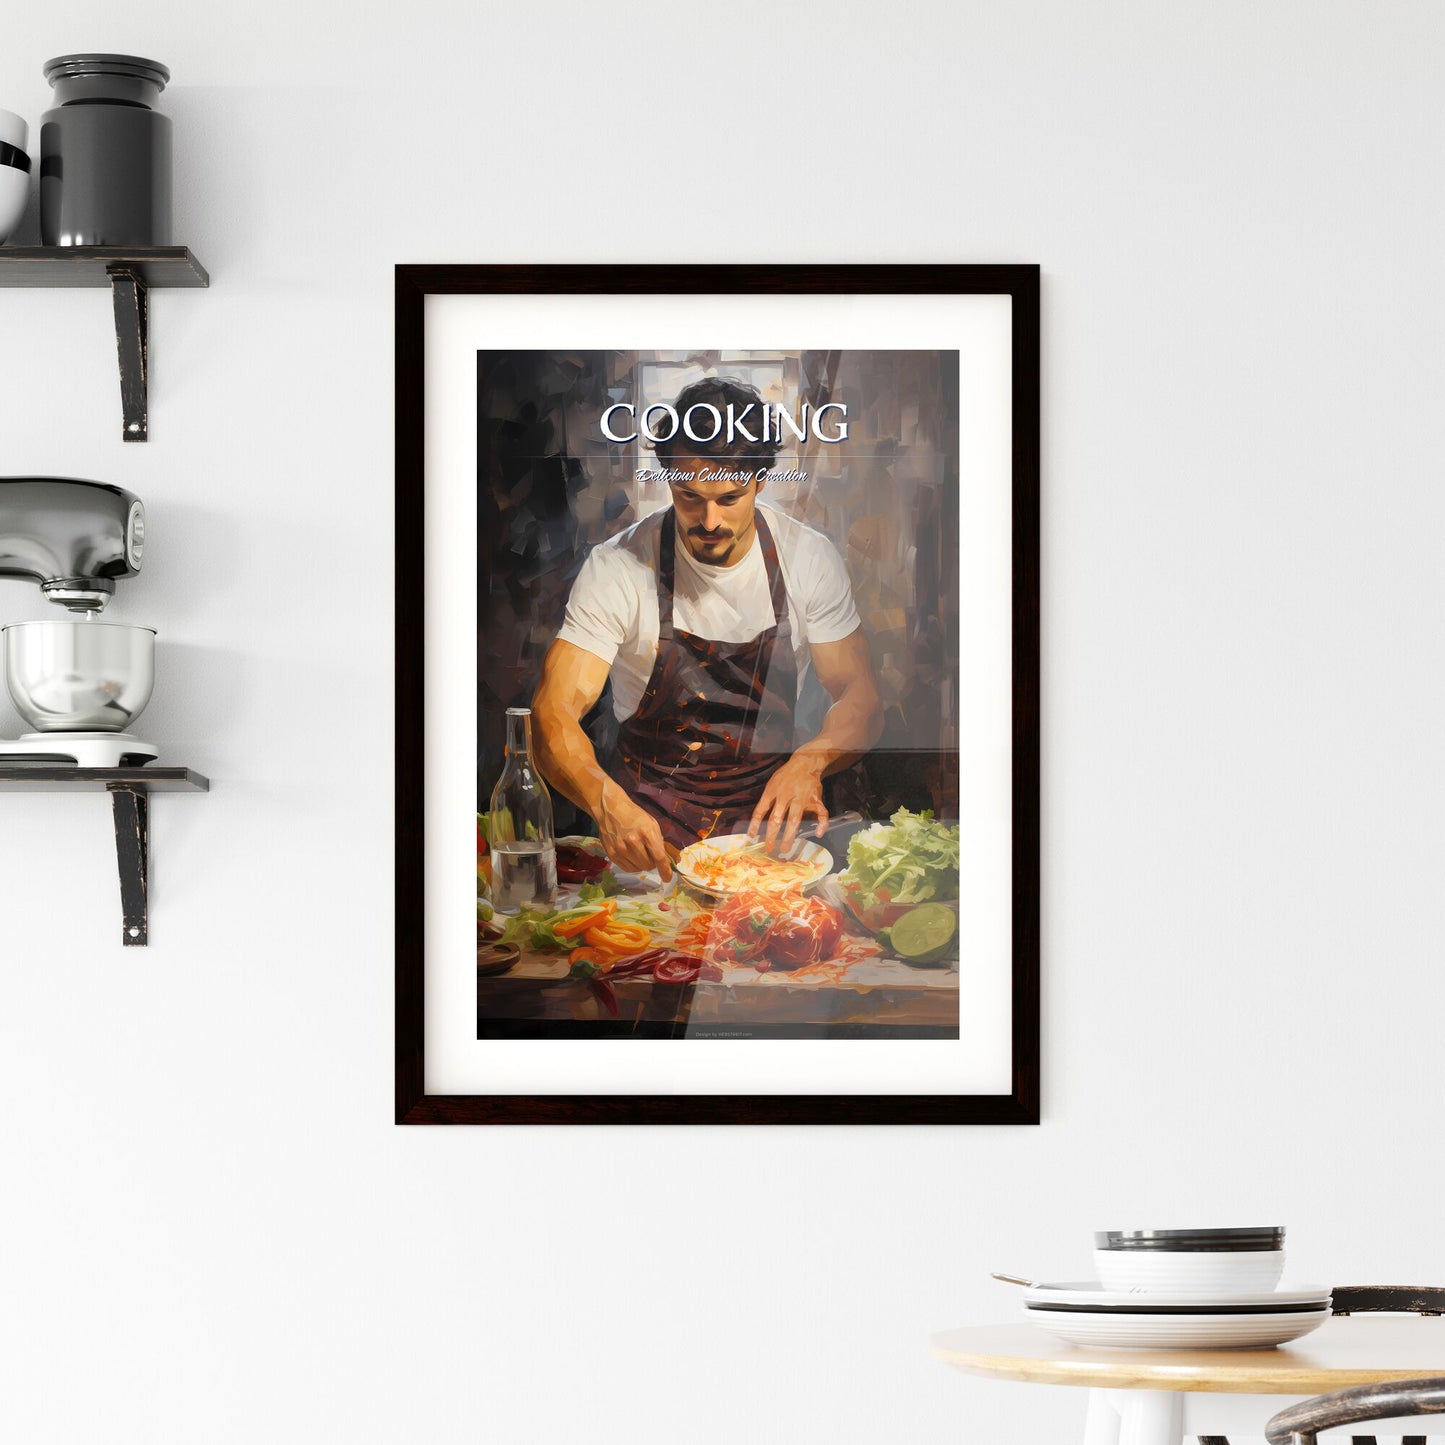 Mats Hummels Making A Salt And Pepper Salad - A Man In An Apron Cooking Default Title